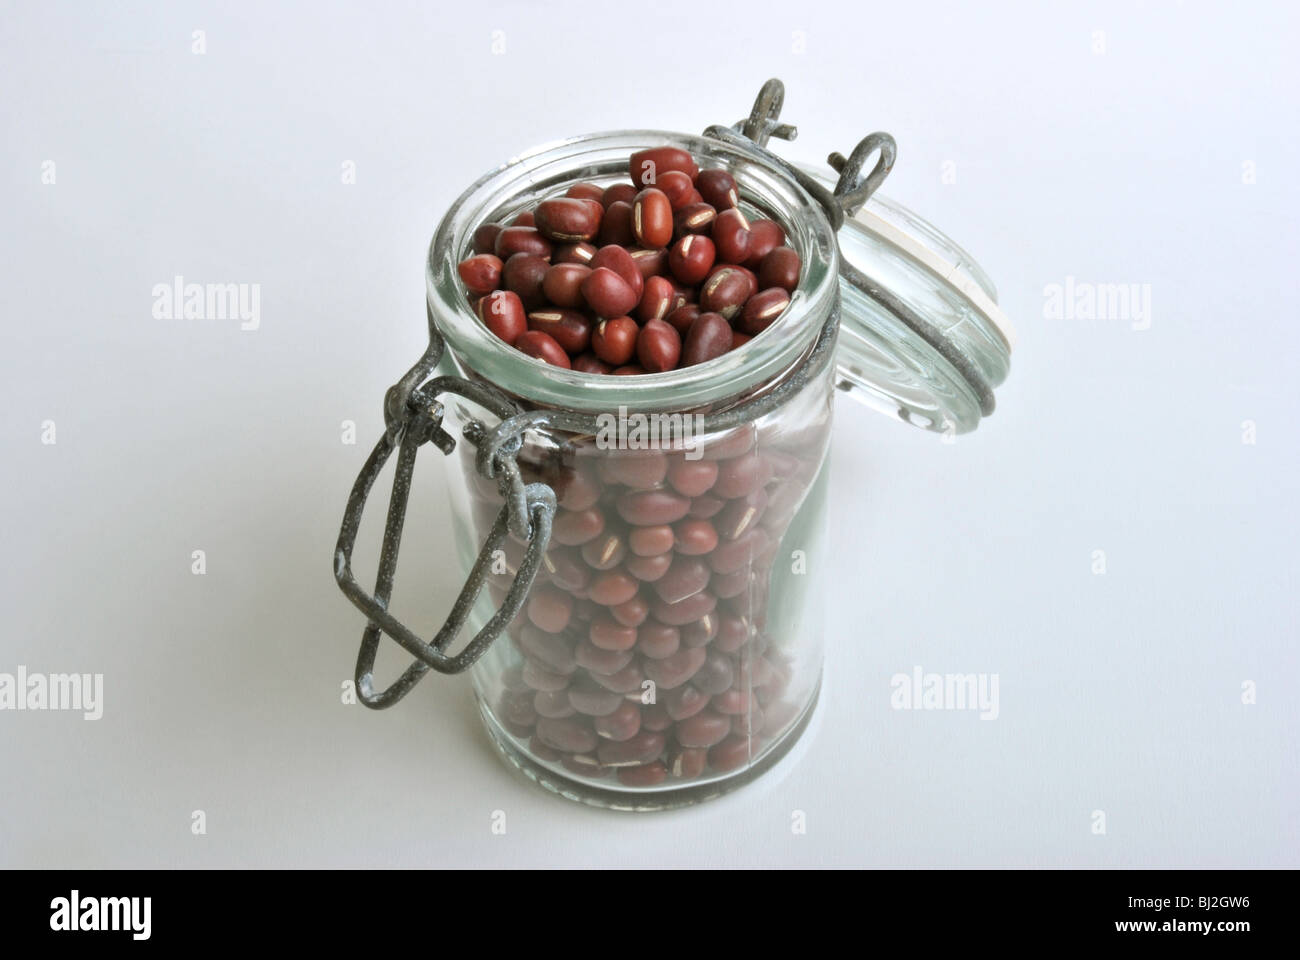 adzuki beans are a good source of fibre Stock Photo